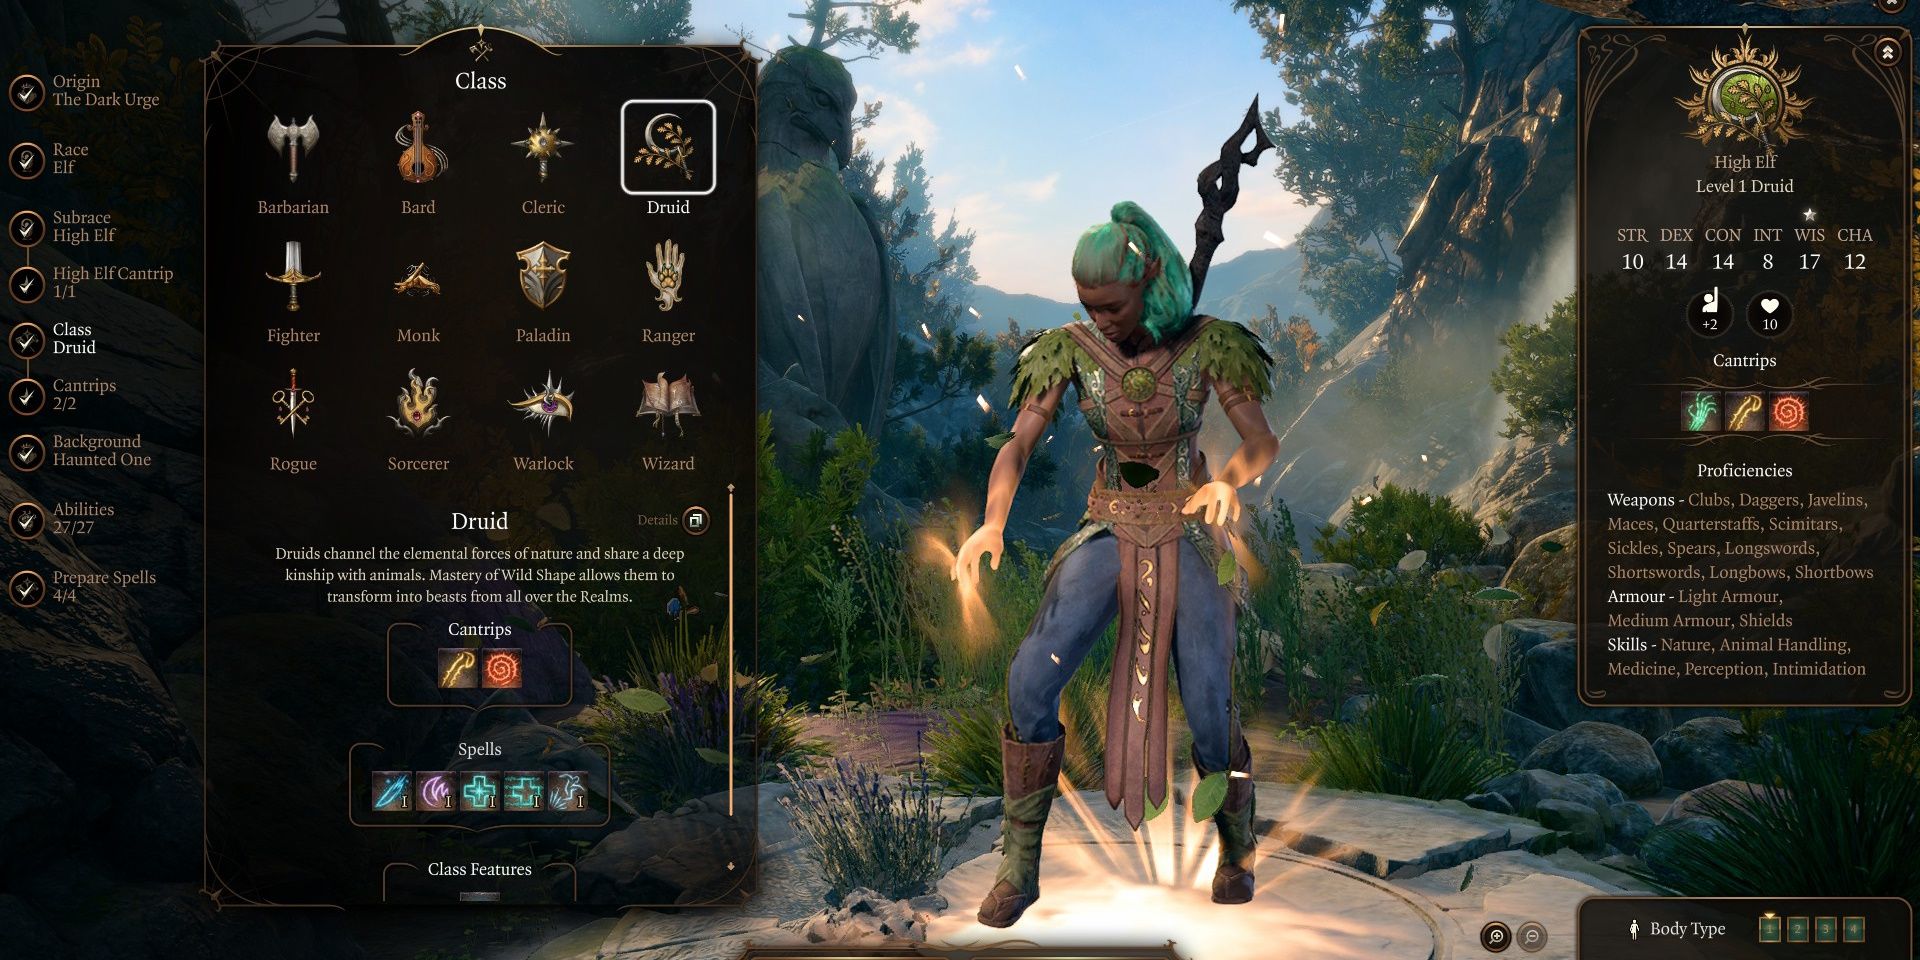 Character creation screen showing high elf druid in Baldur's Gate 3